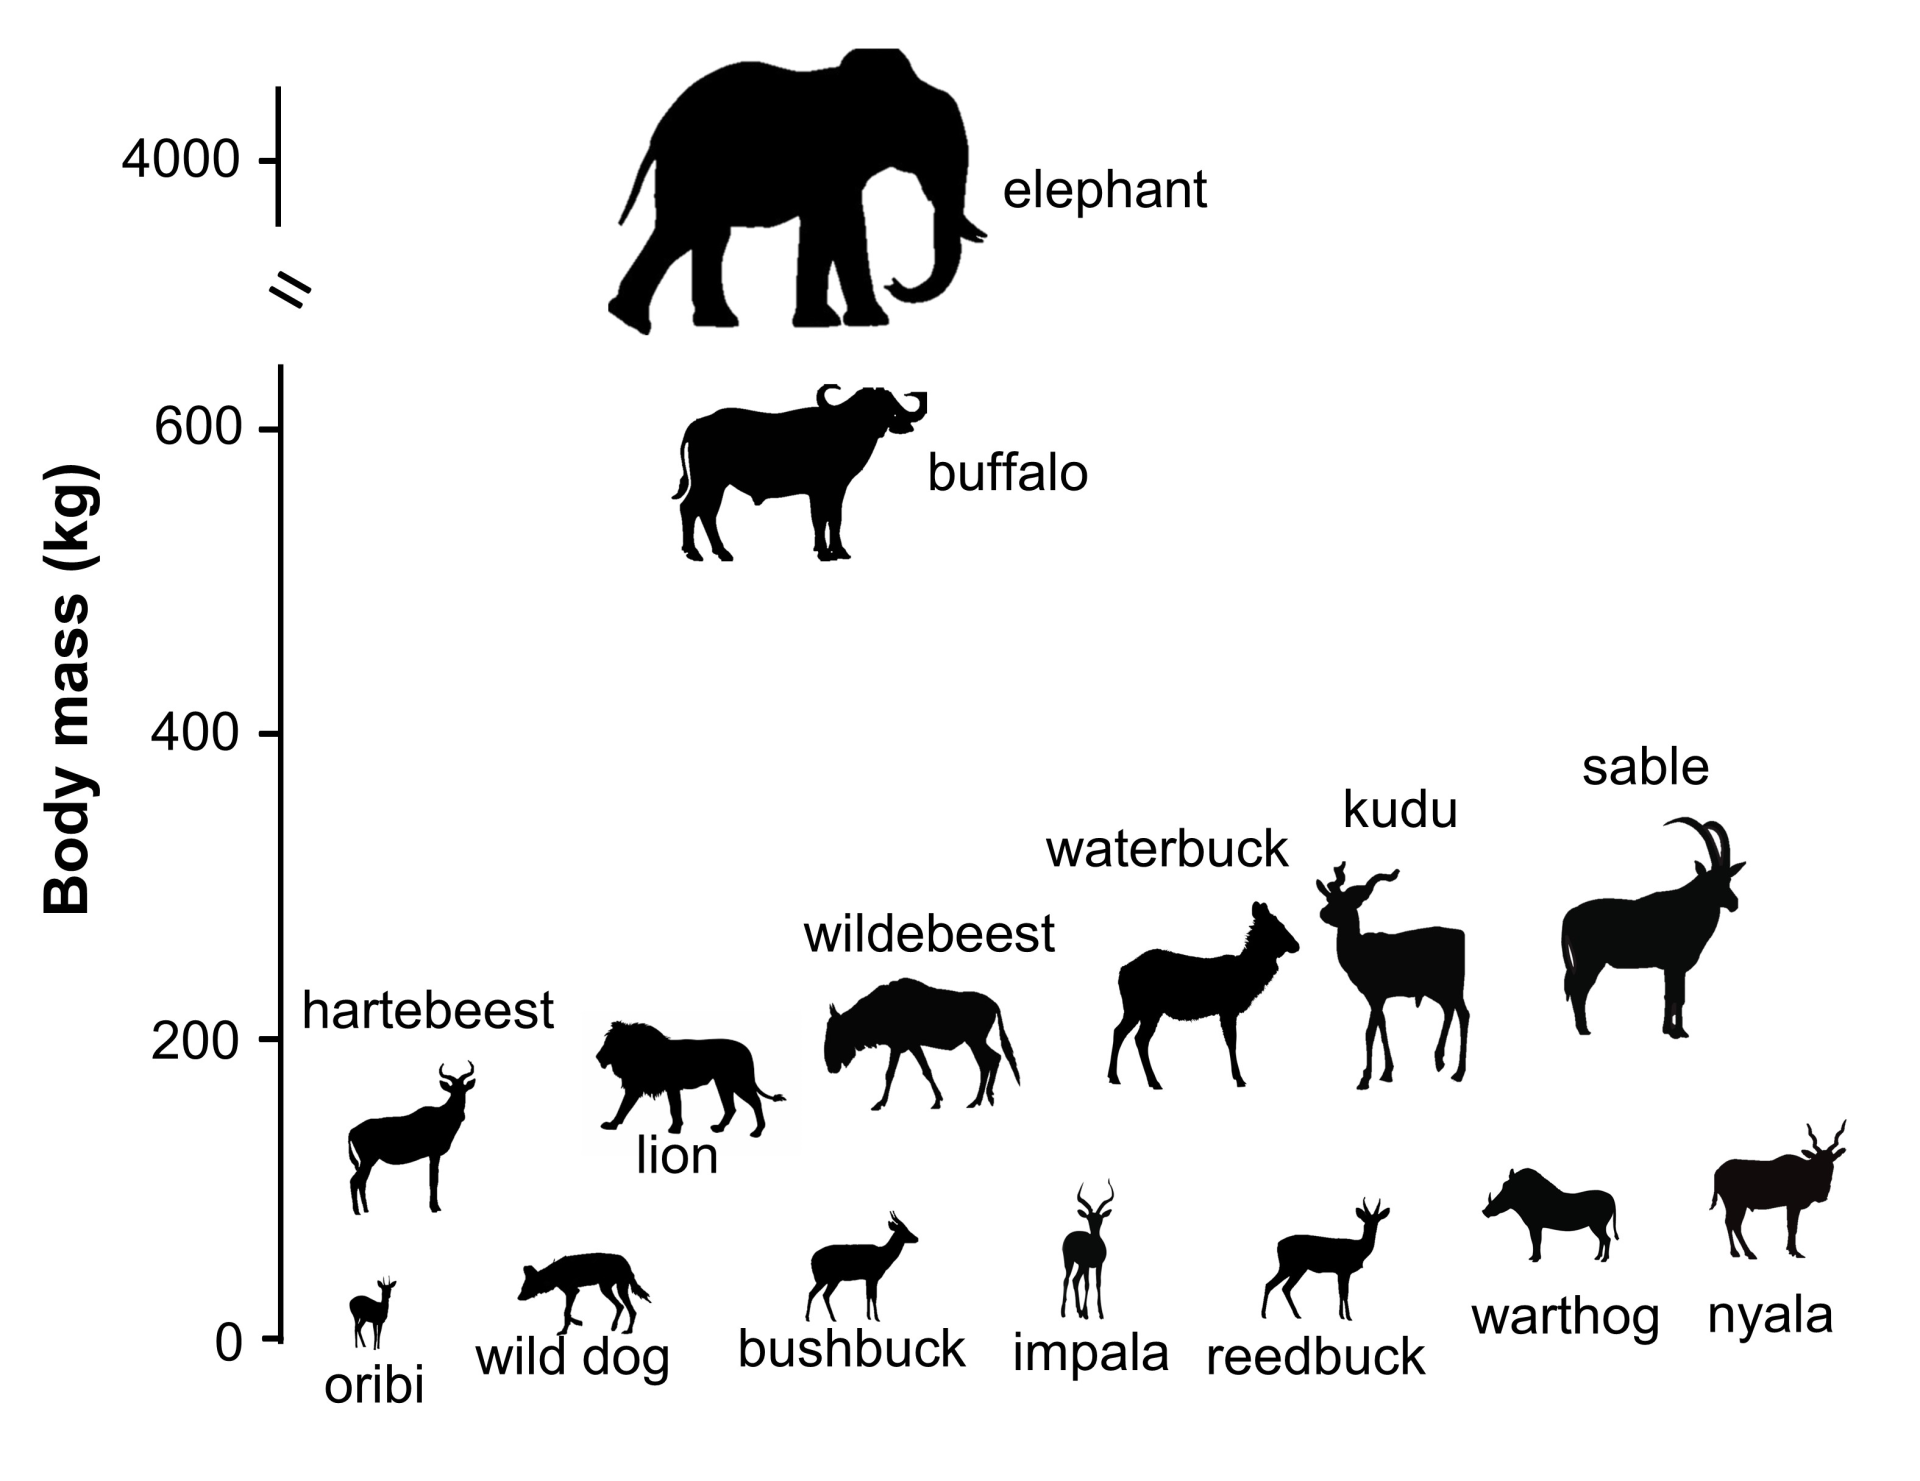 Mammals in the study arranged by size. From smallest to largest, they are oribi, wild dog, bushbuck, impala, reedbuck, warthog, nyala, hartebeest, lion, wildebeest, waterbuck, kudu, sable, buffalo and elephant.